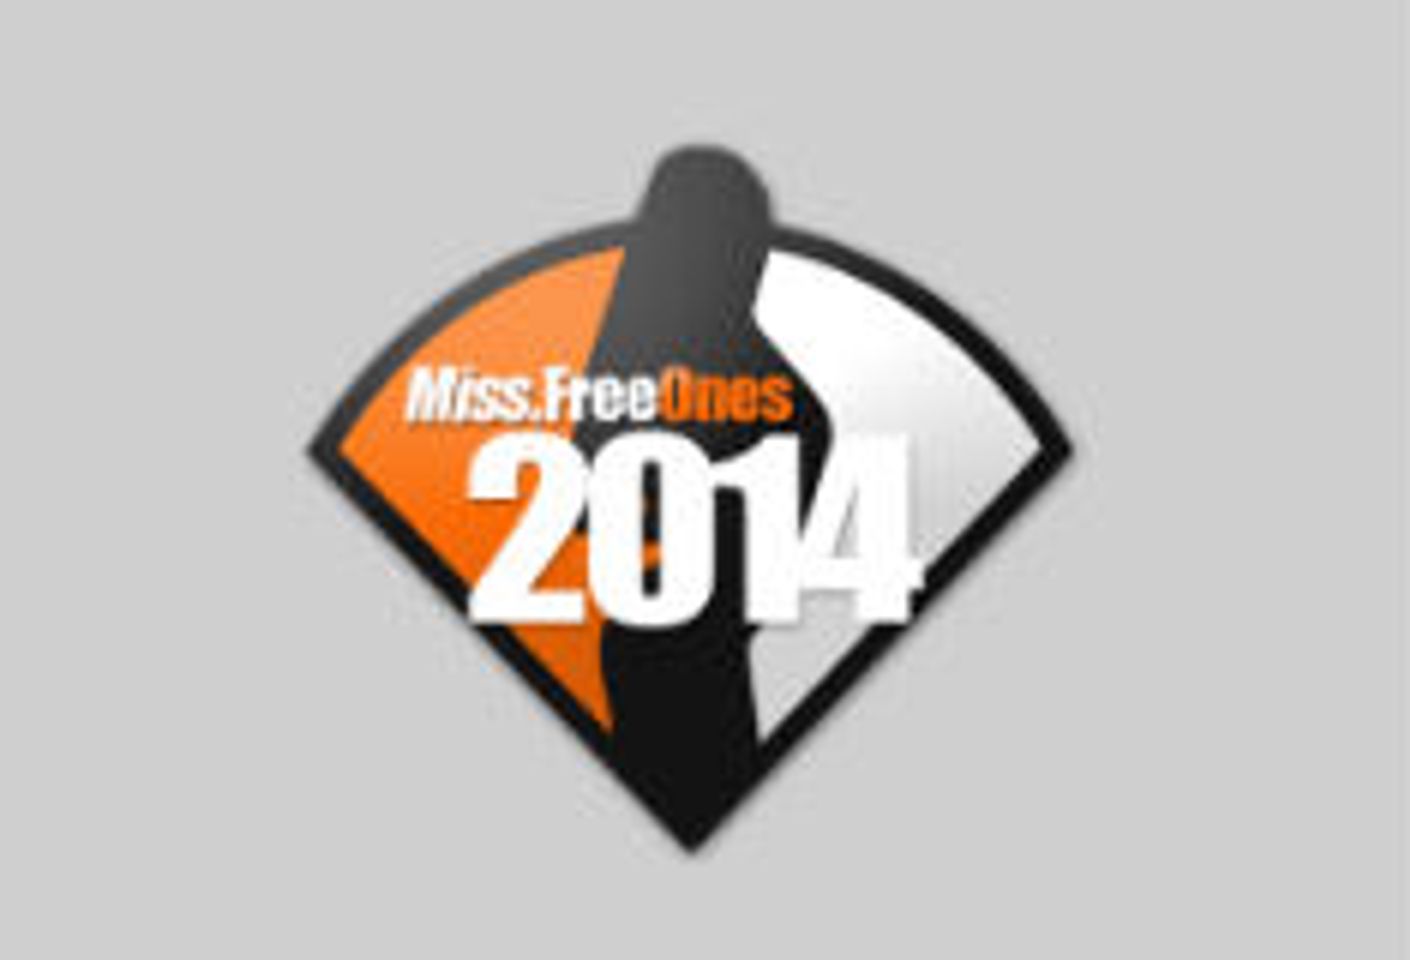 Miss FreeOnes 2014 Voting Platform Announced